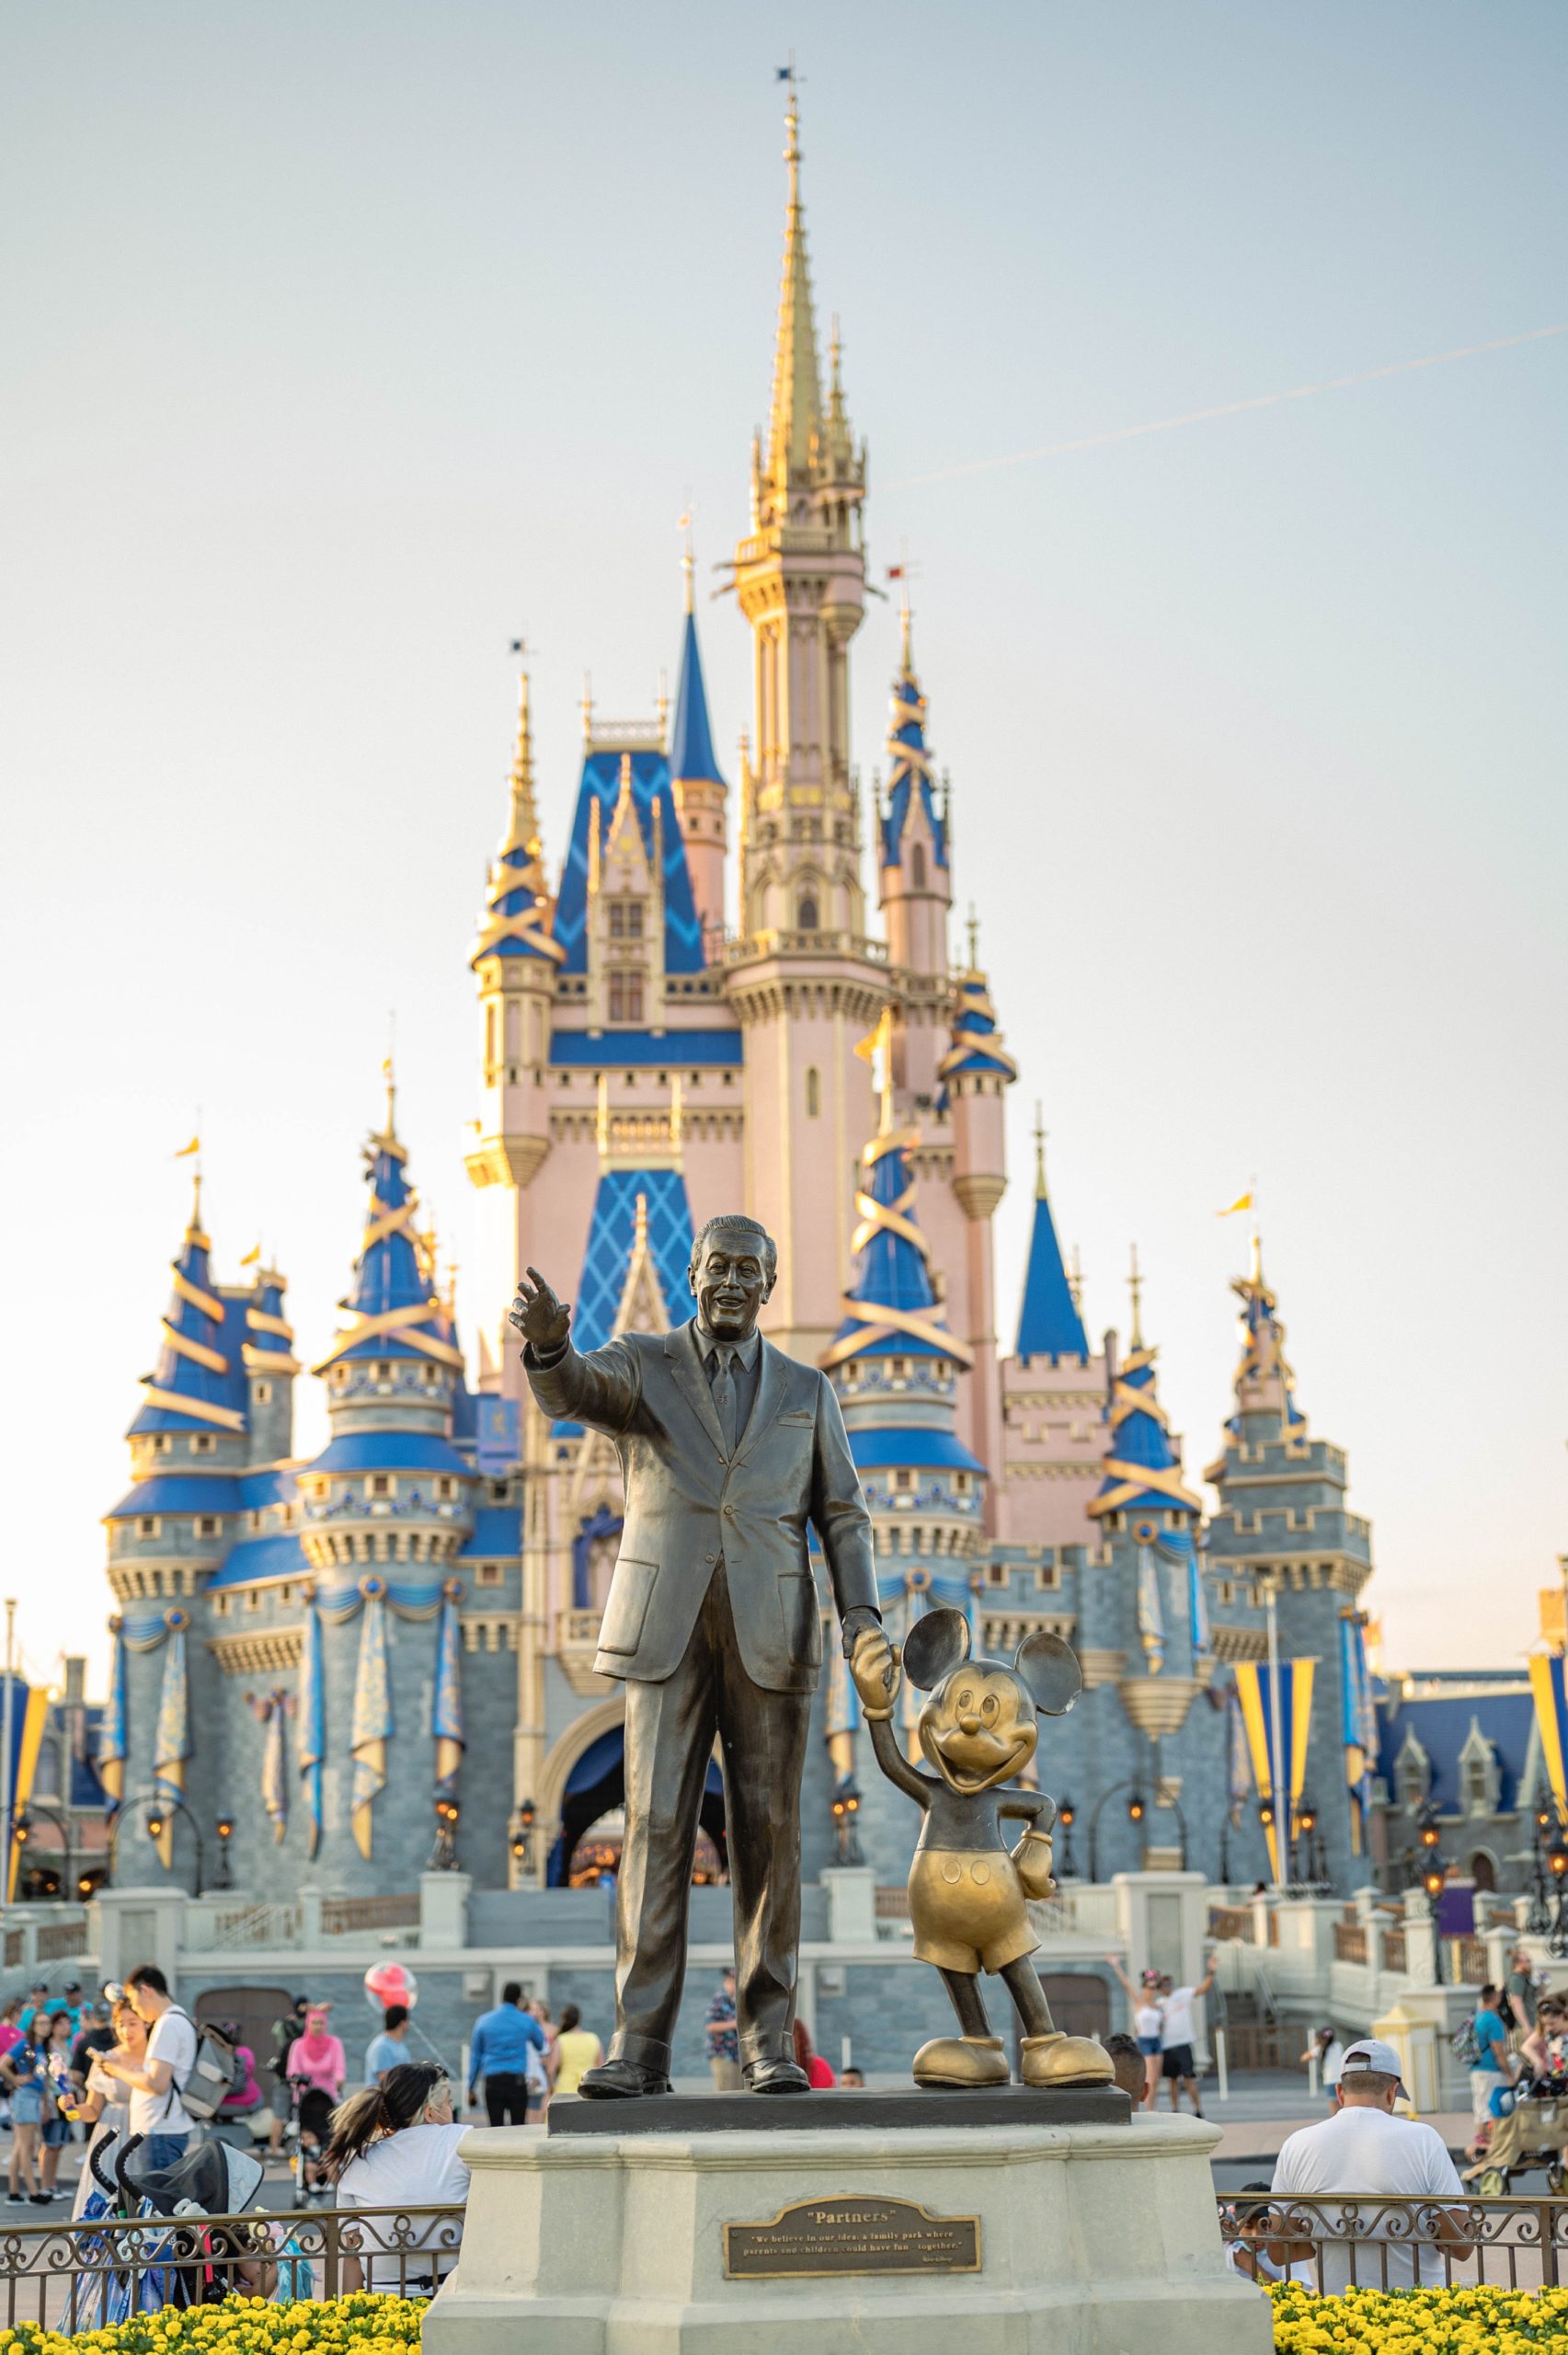 The Walt Disney Statue in Disney World